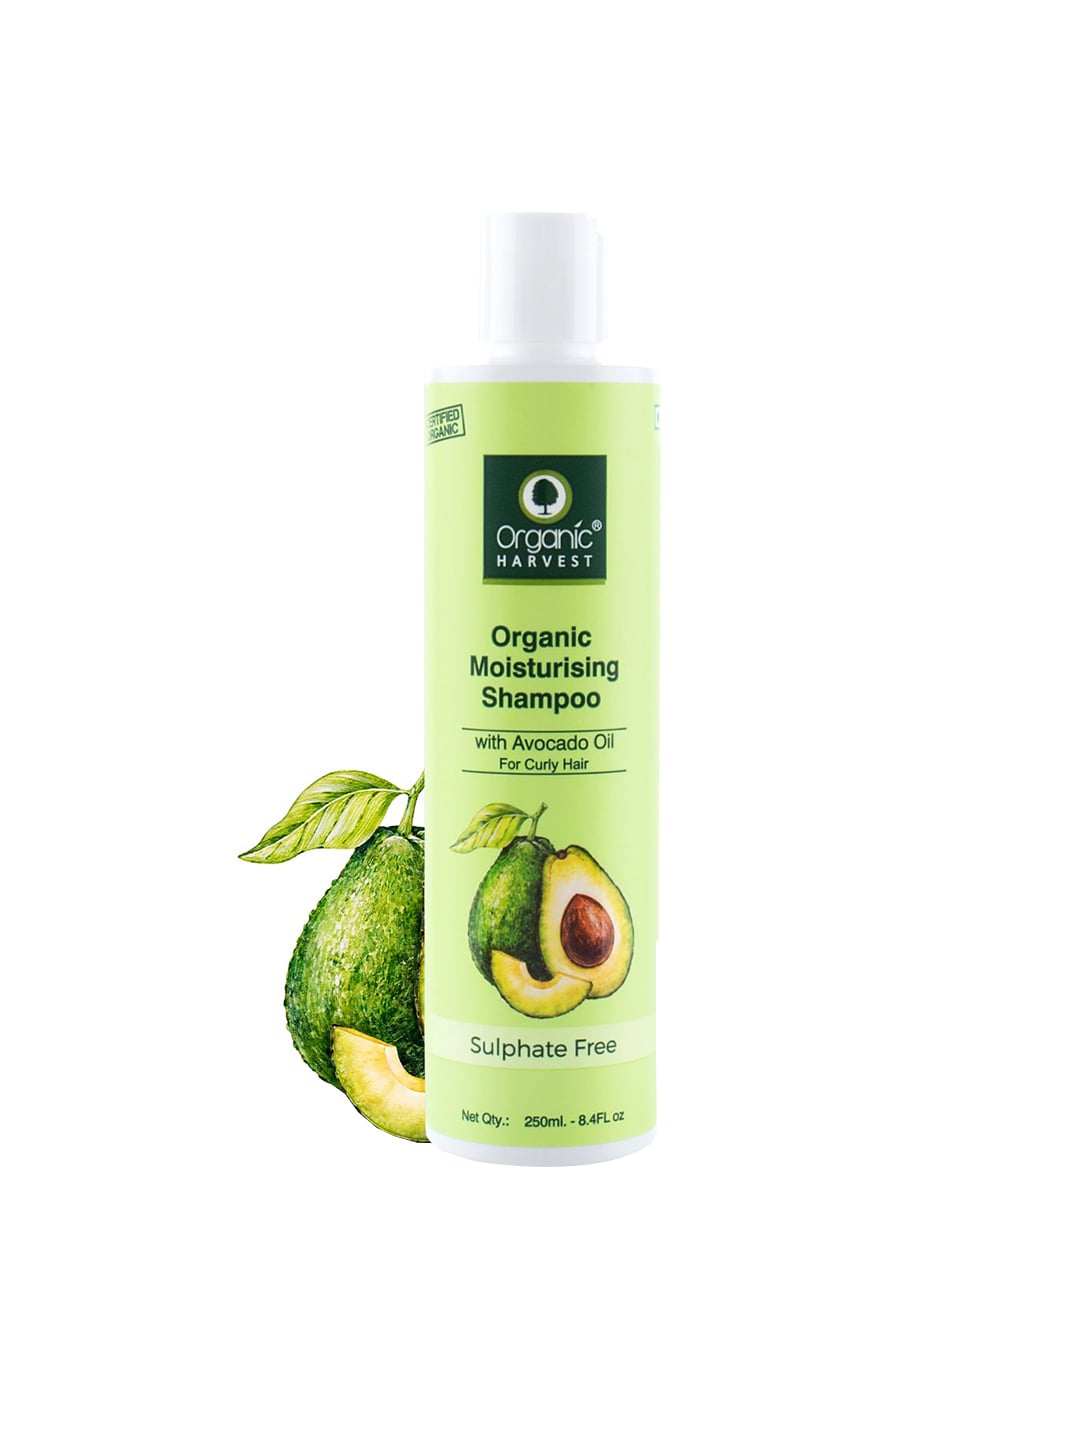 Organic Harvest Moisturising Shampoo with Avocado Oil & Aloe Vera Extract 250 ml Price in India